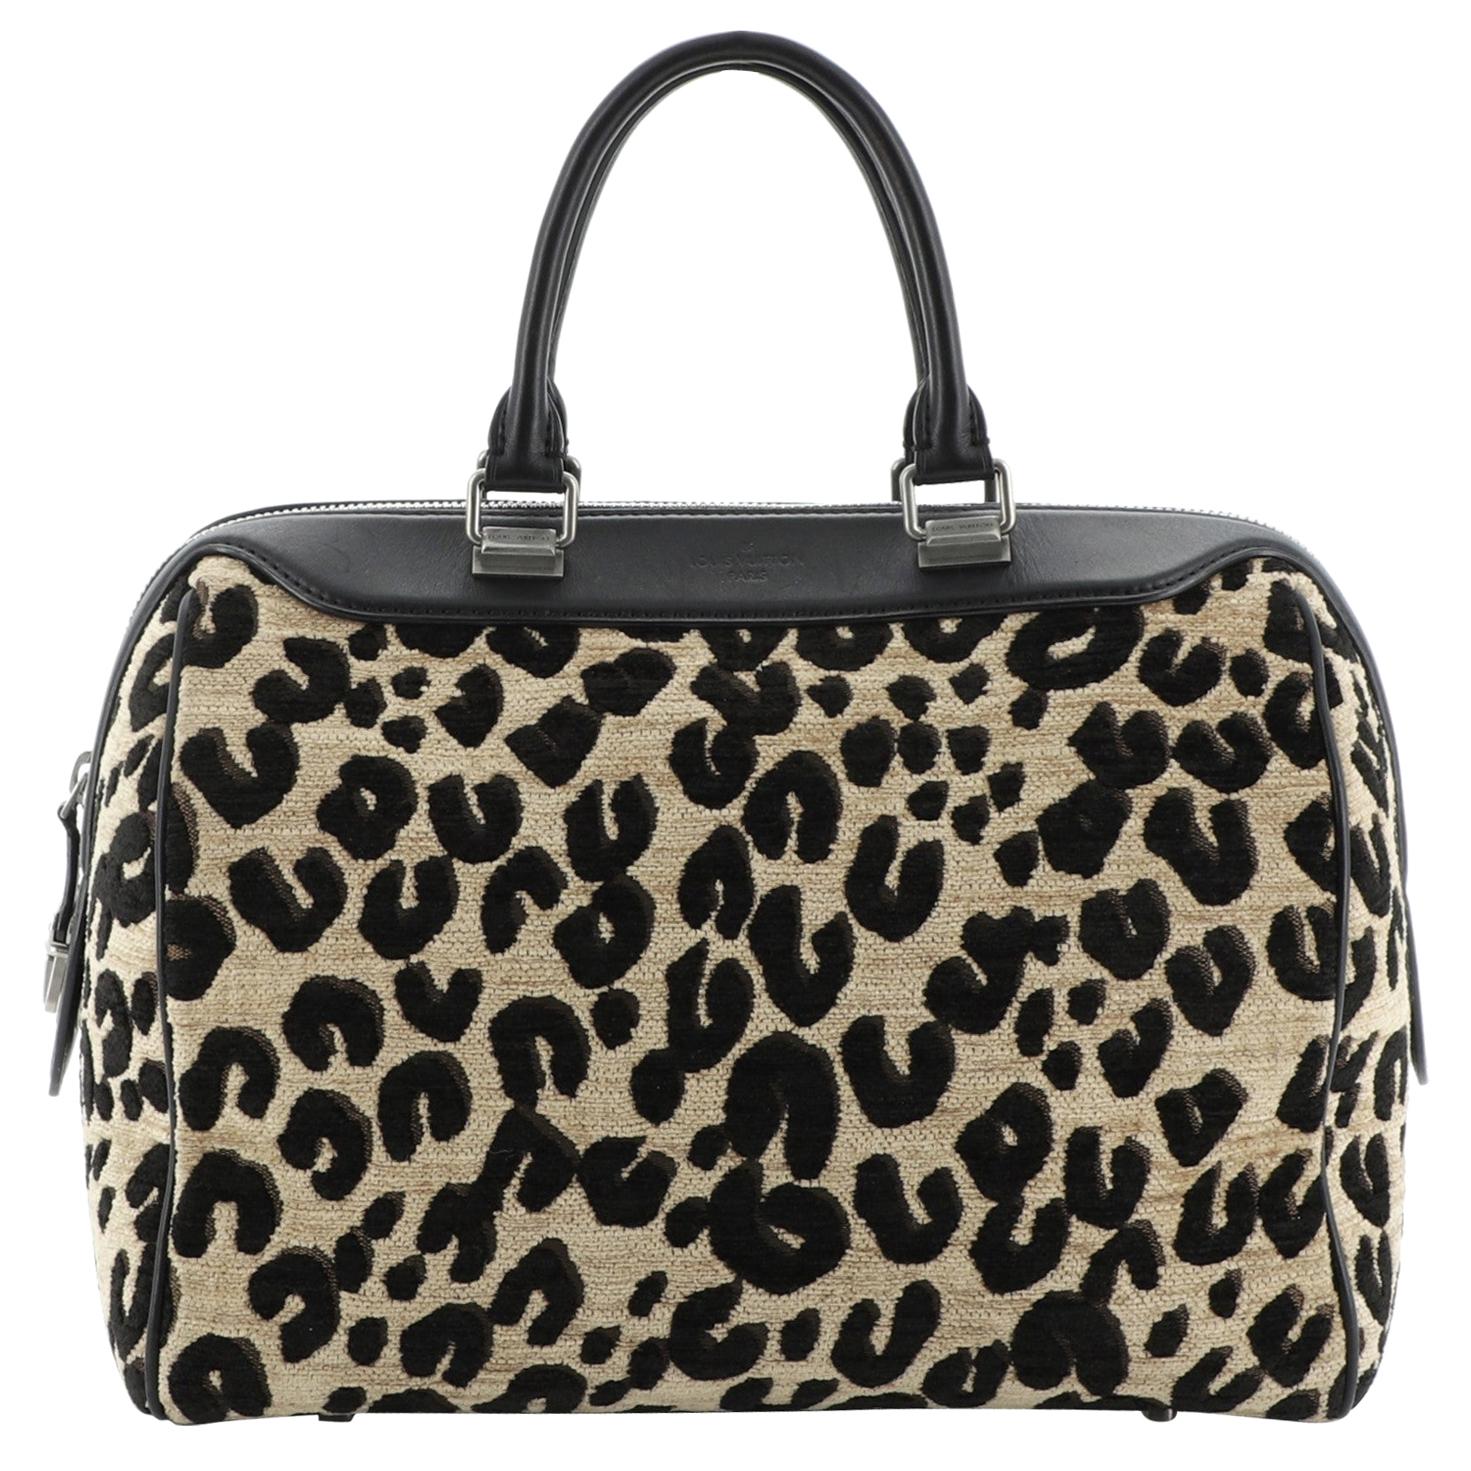 Louis Vuitton Speedy Handbag Limited Edition Stephen Sprouse Leopard Chenille